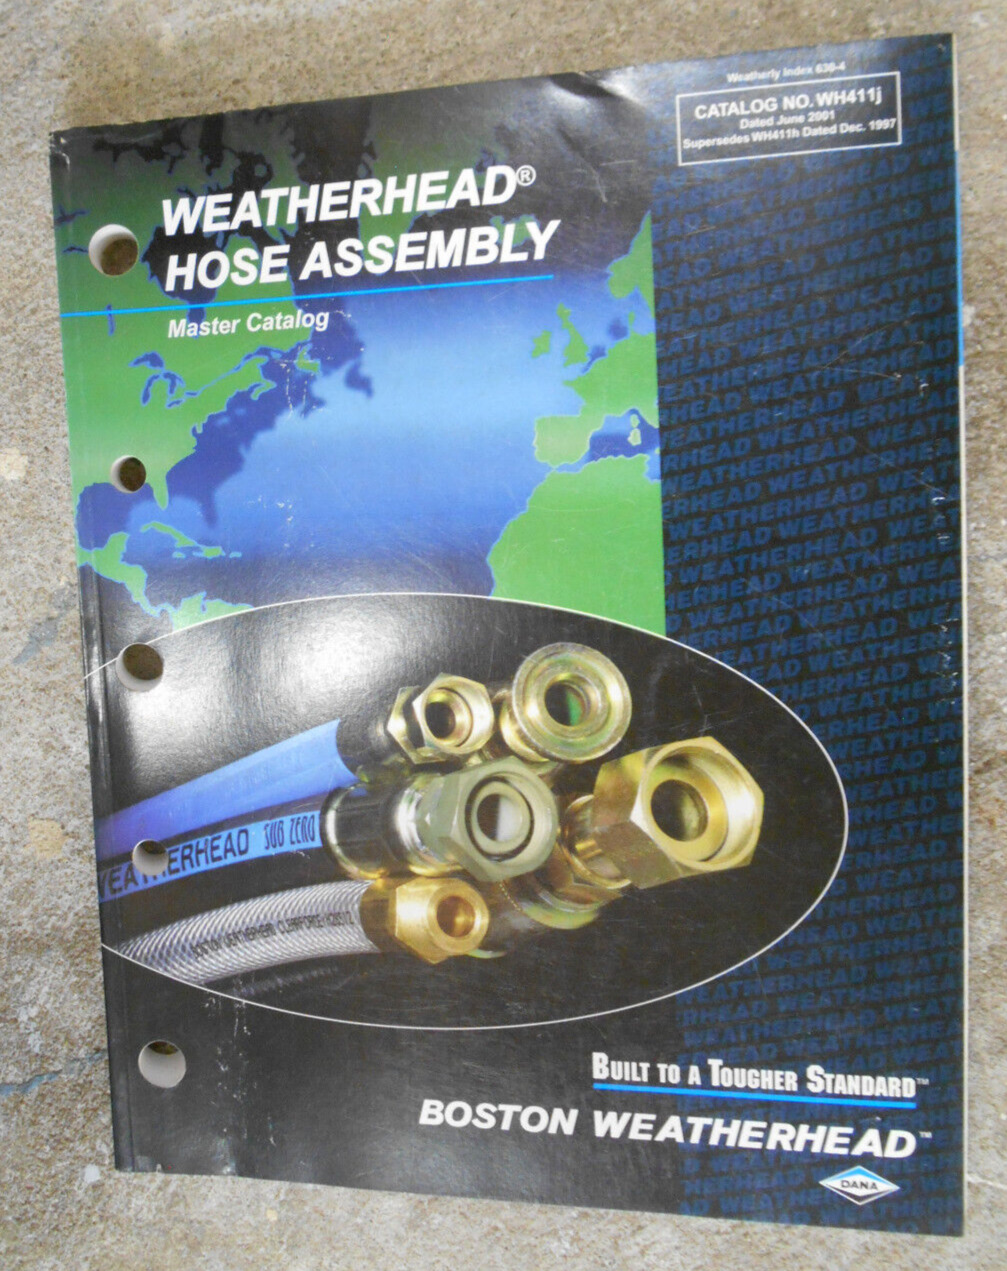 Vintage 2001 Boston Weatherhead Hose Assembly Thick Master Catalog WH411j Dana